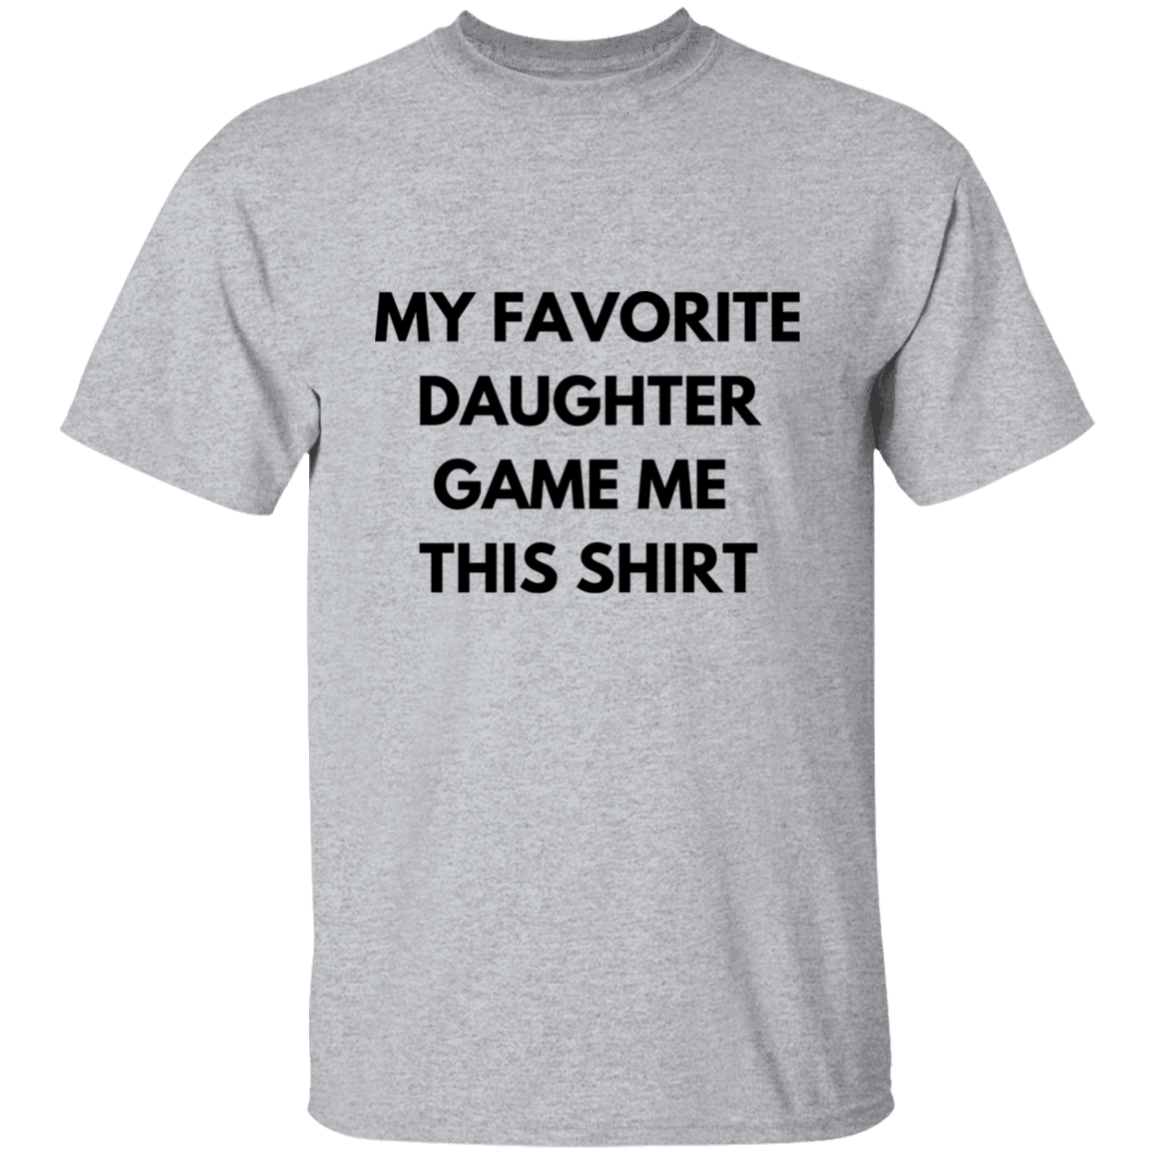 My Favorite Daughter Gave me This T-Shirt - Serbachi